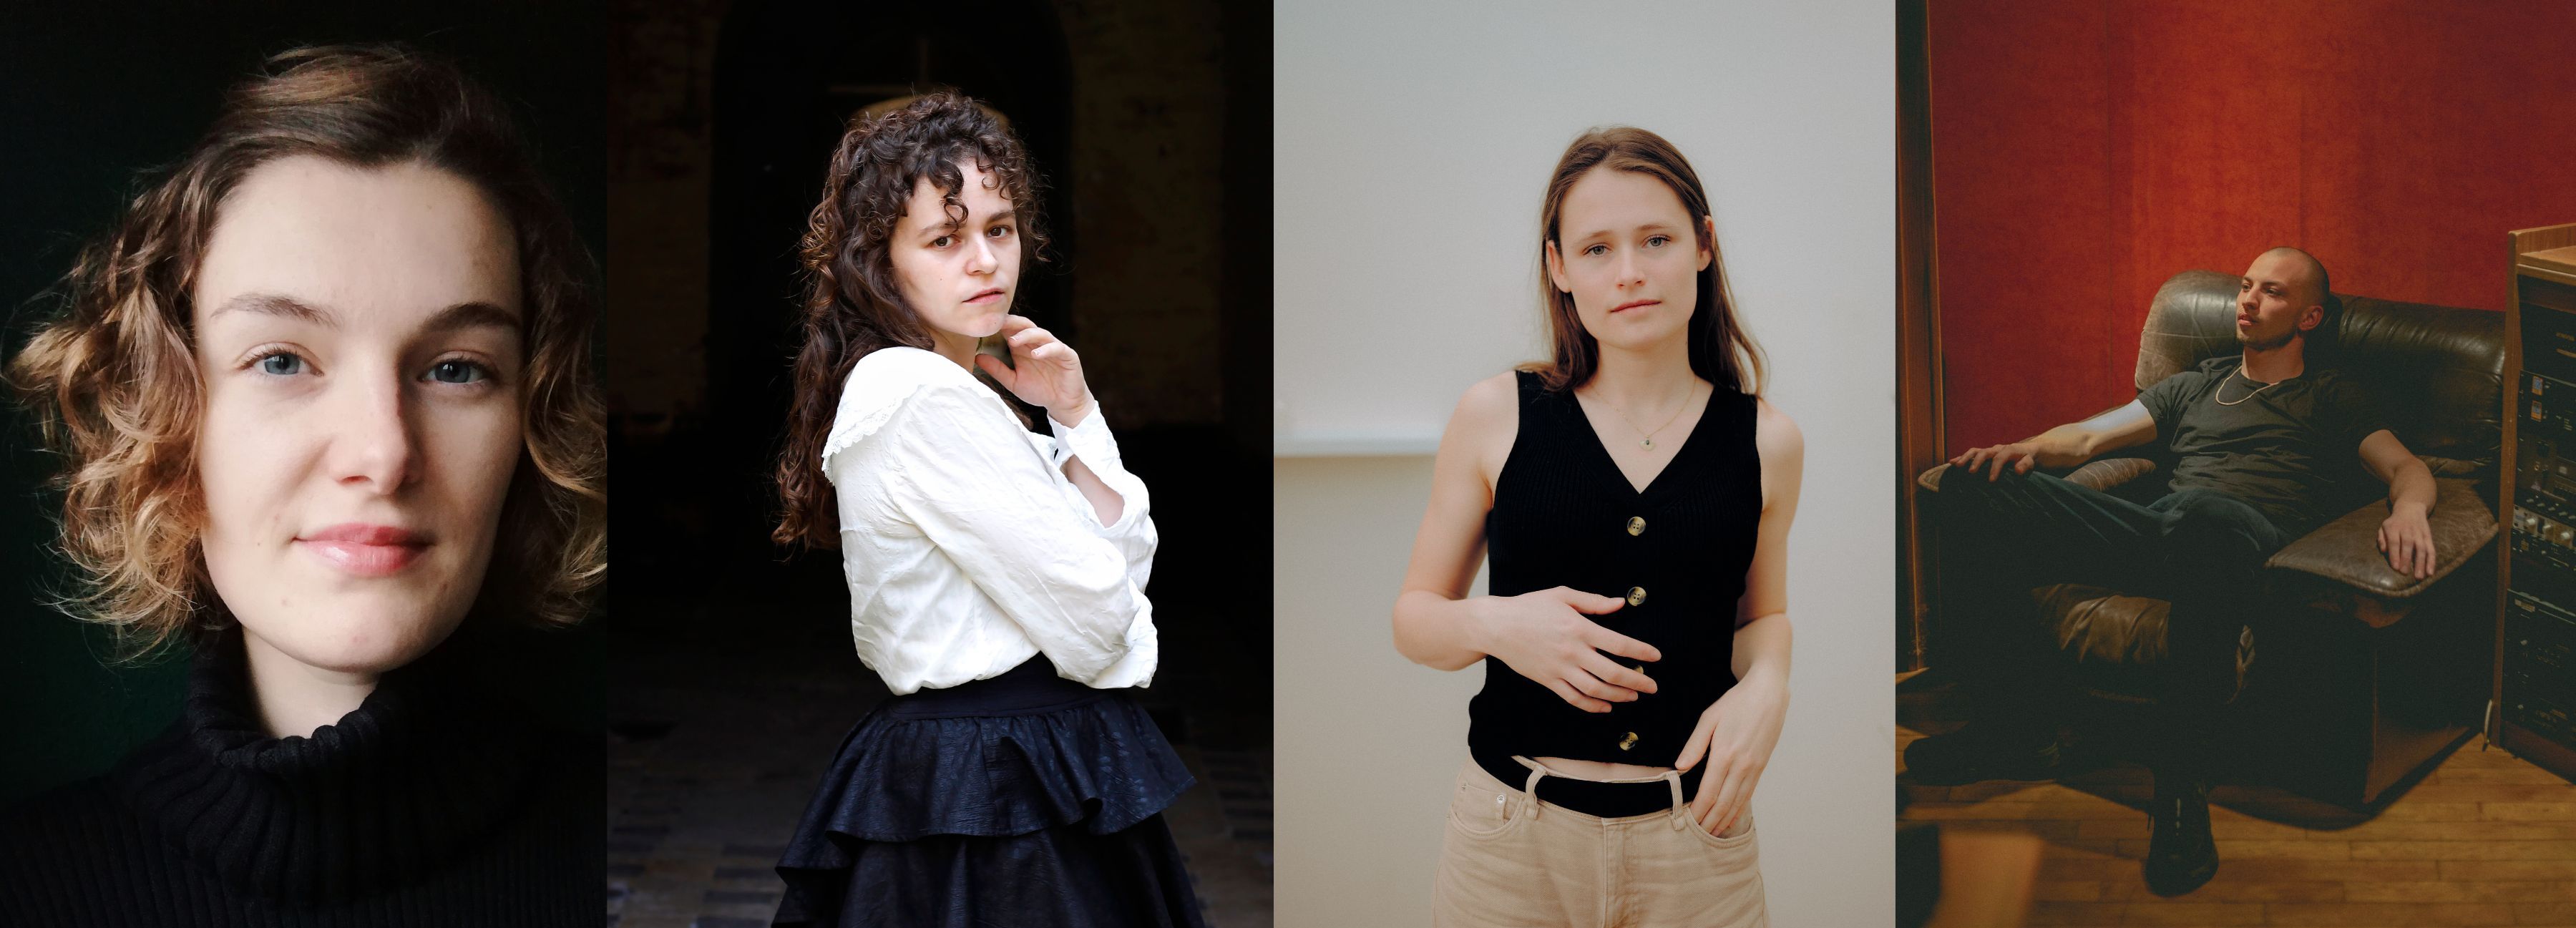 Portretfoto's van Eveline Mineur, Stefanie Huysmans-Noorts, Charlotte de Beus en Anton Van Laer